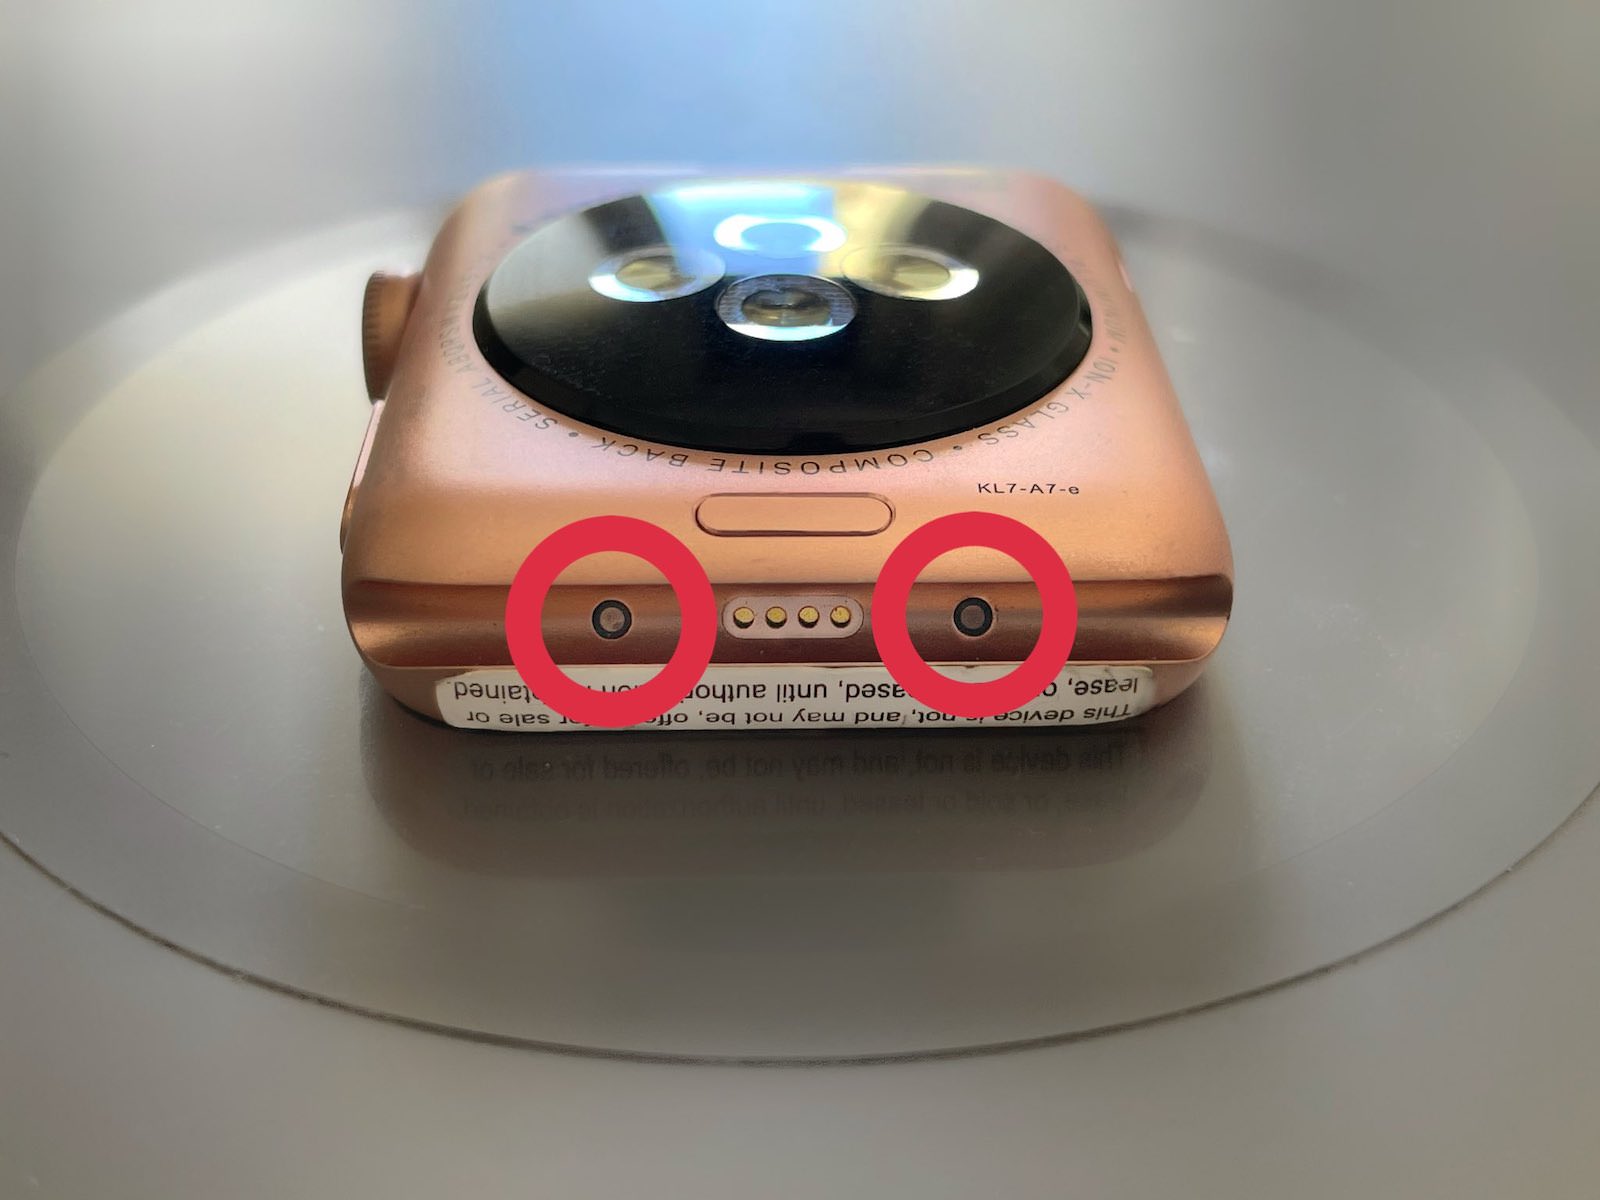 Smart Connector like on AppleWatchSeries3 prototype